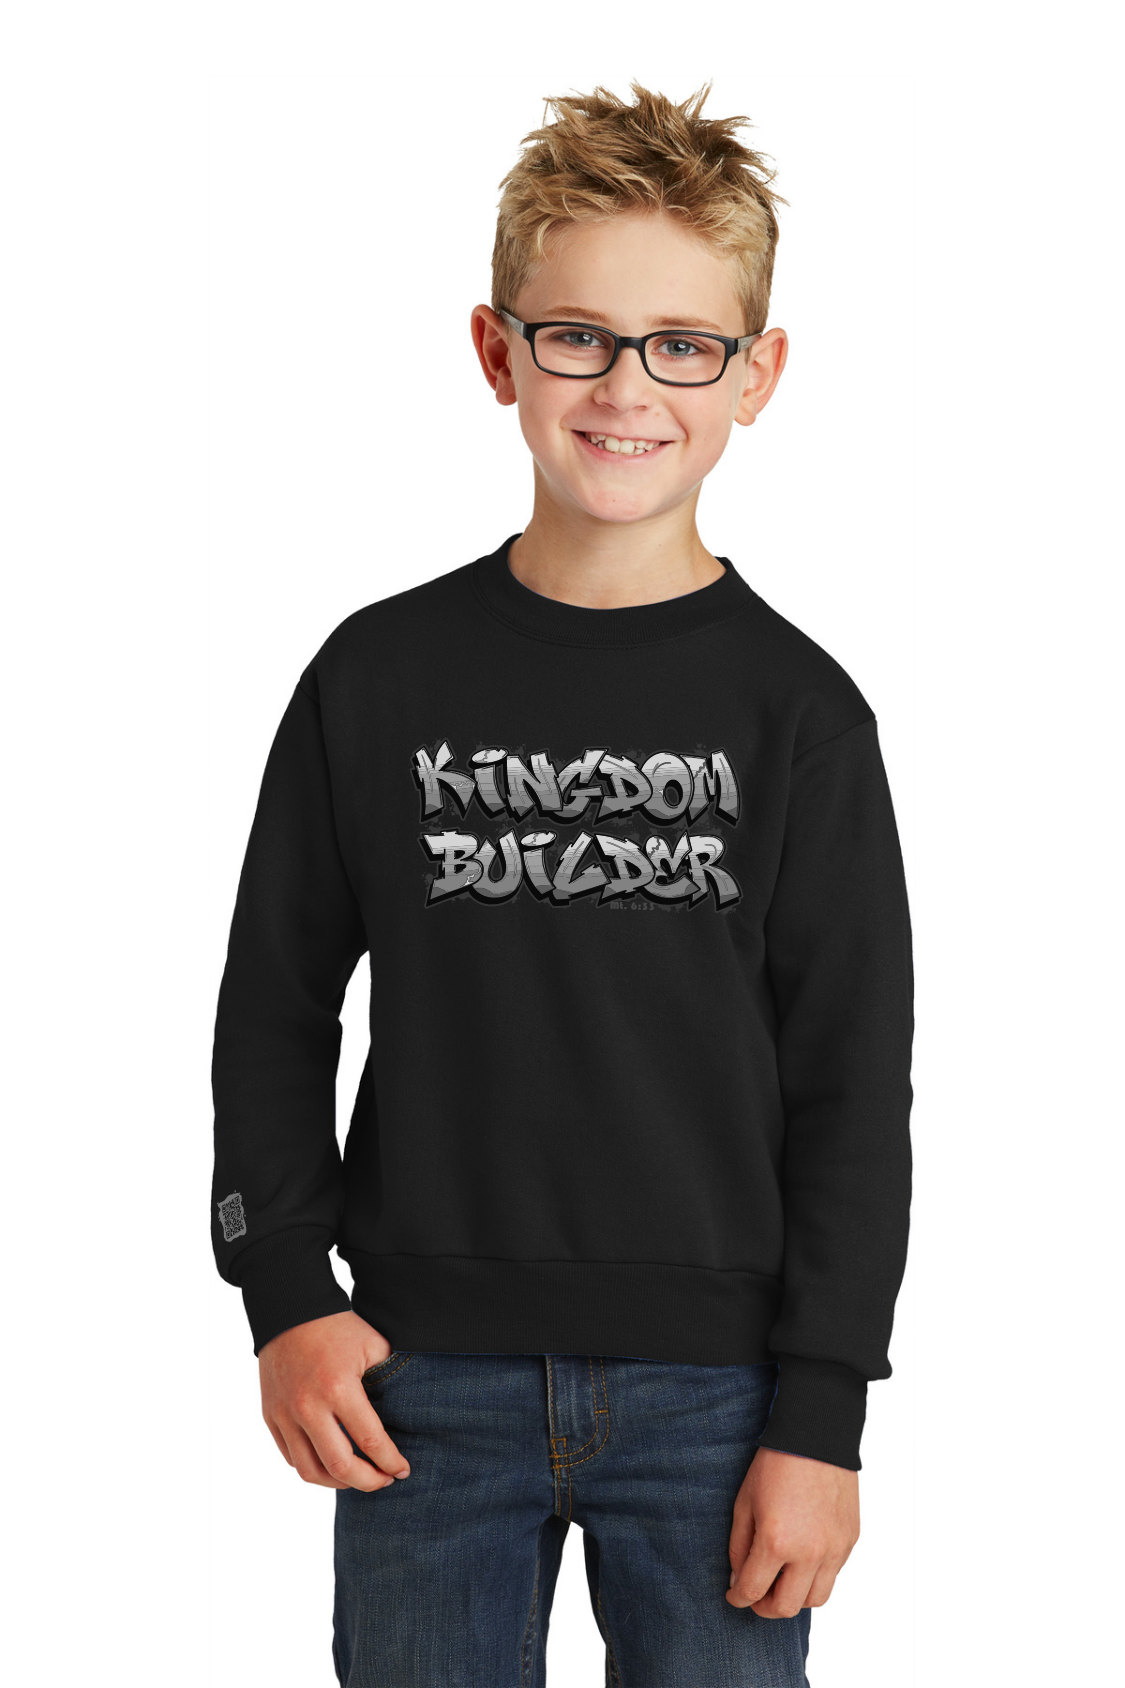 Kingdom Builder - Black Sweatshirt - Black / White Graphics